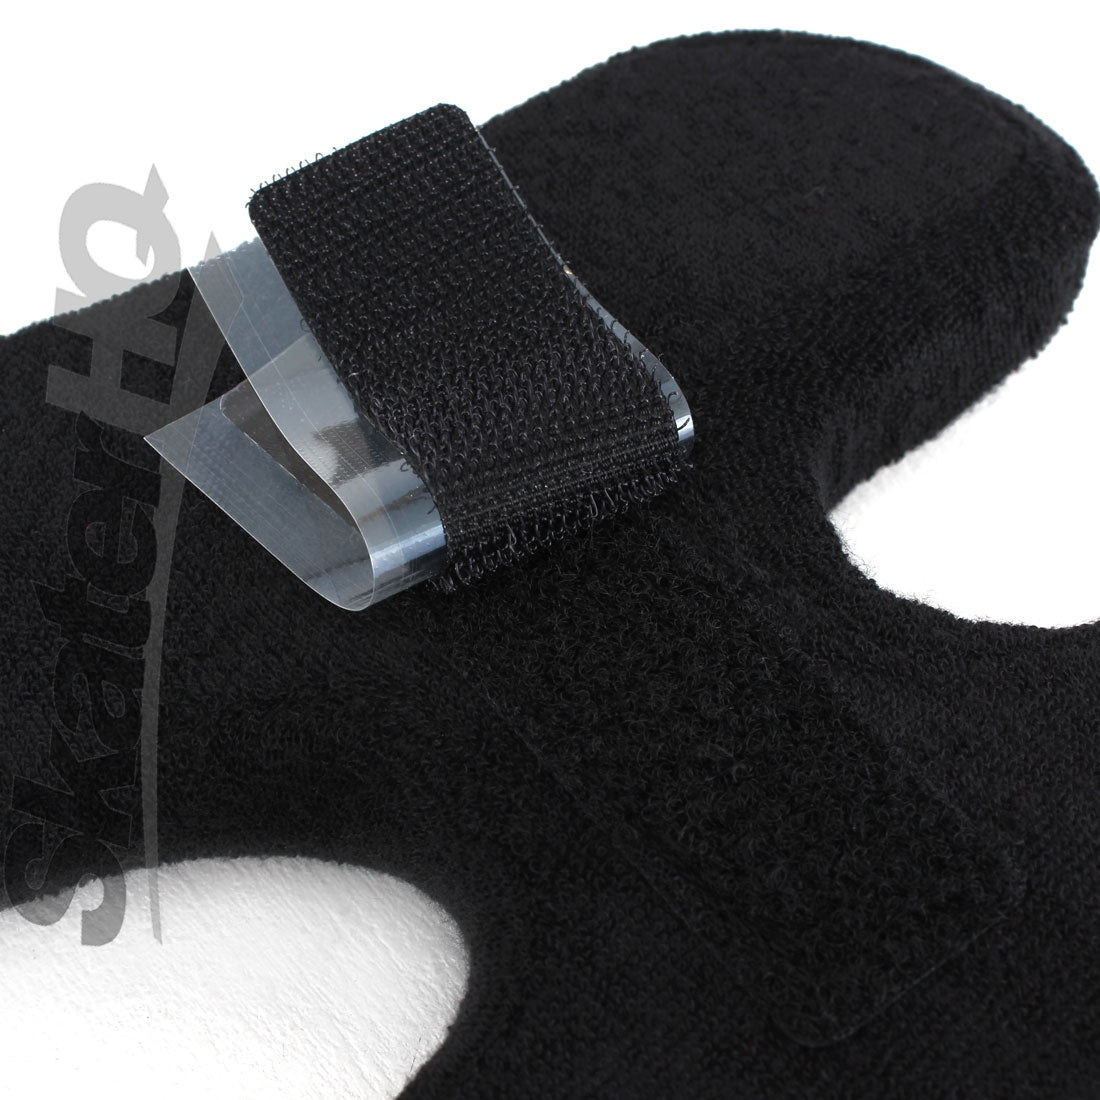 Triple 8 Sweatsaver Liner Black - Medium Helmet liners